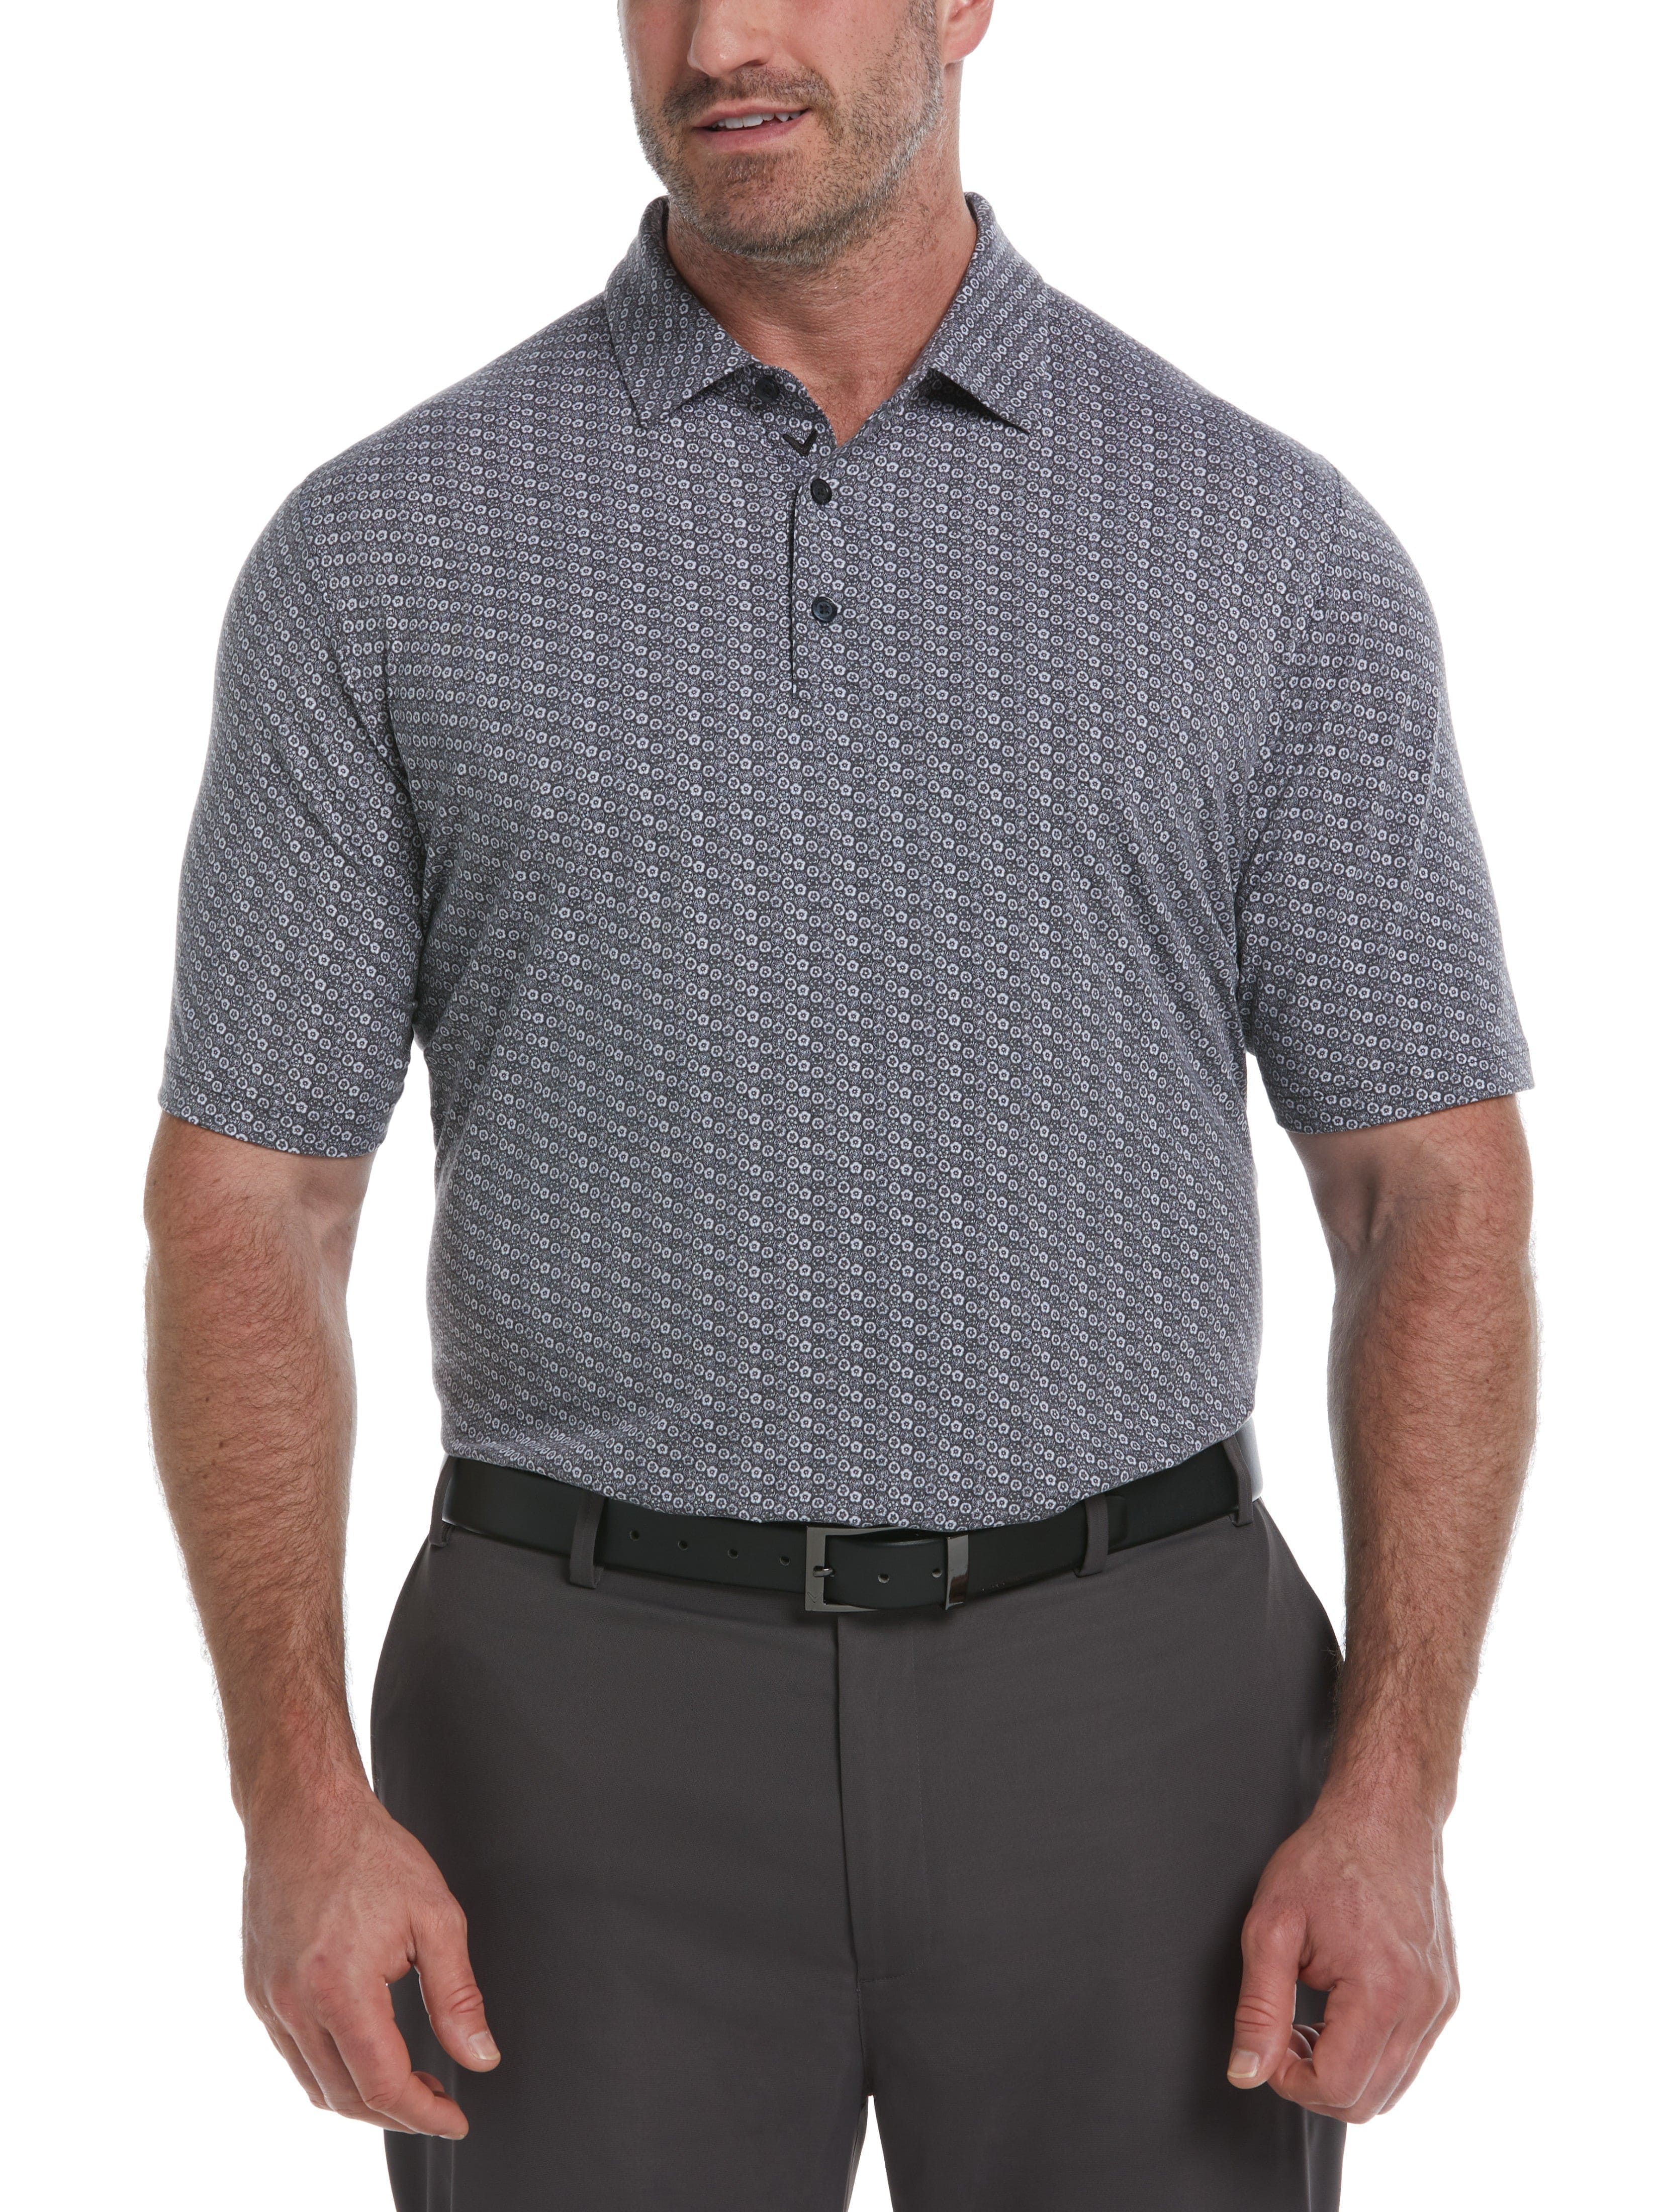 Callaway Apparel Mens Big & Tall Allover Tie Dye Foulard Print Golf Polo Shirt, Size 3X, Black, Polyester/Cotton/Elastane | Golf Apparel Shop